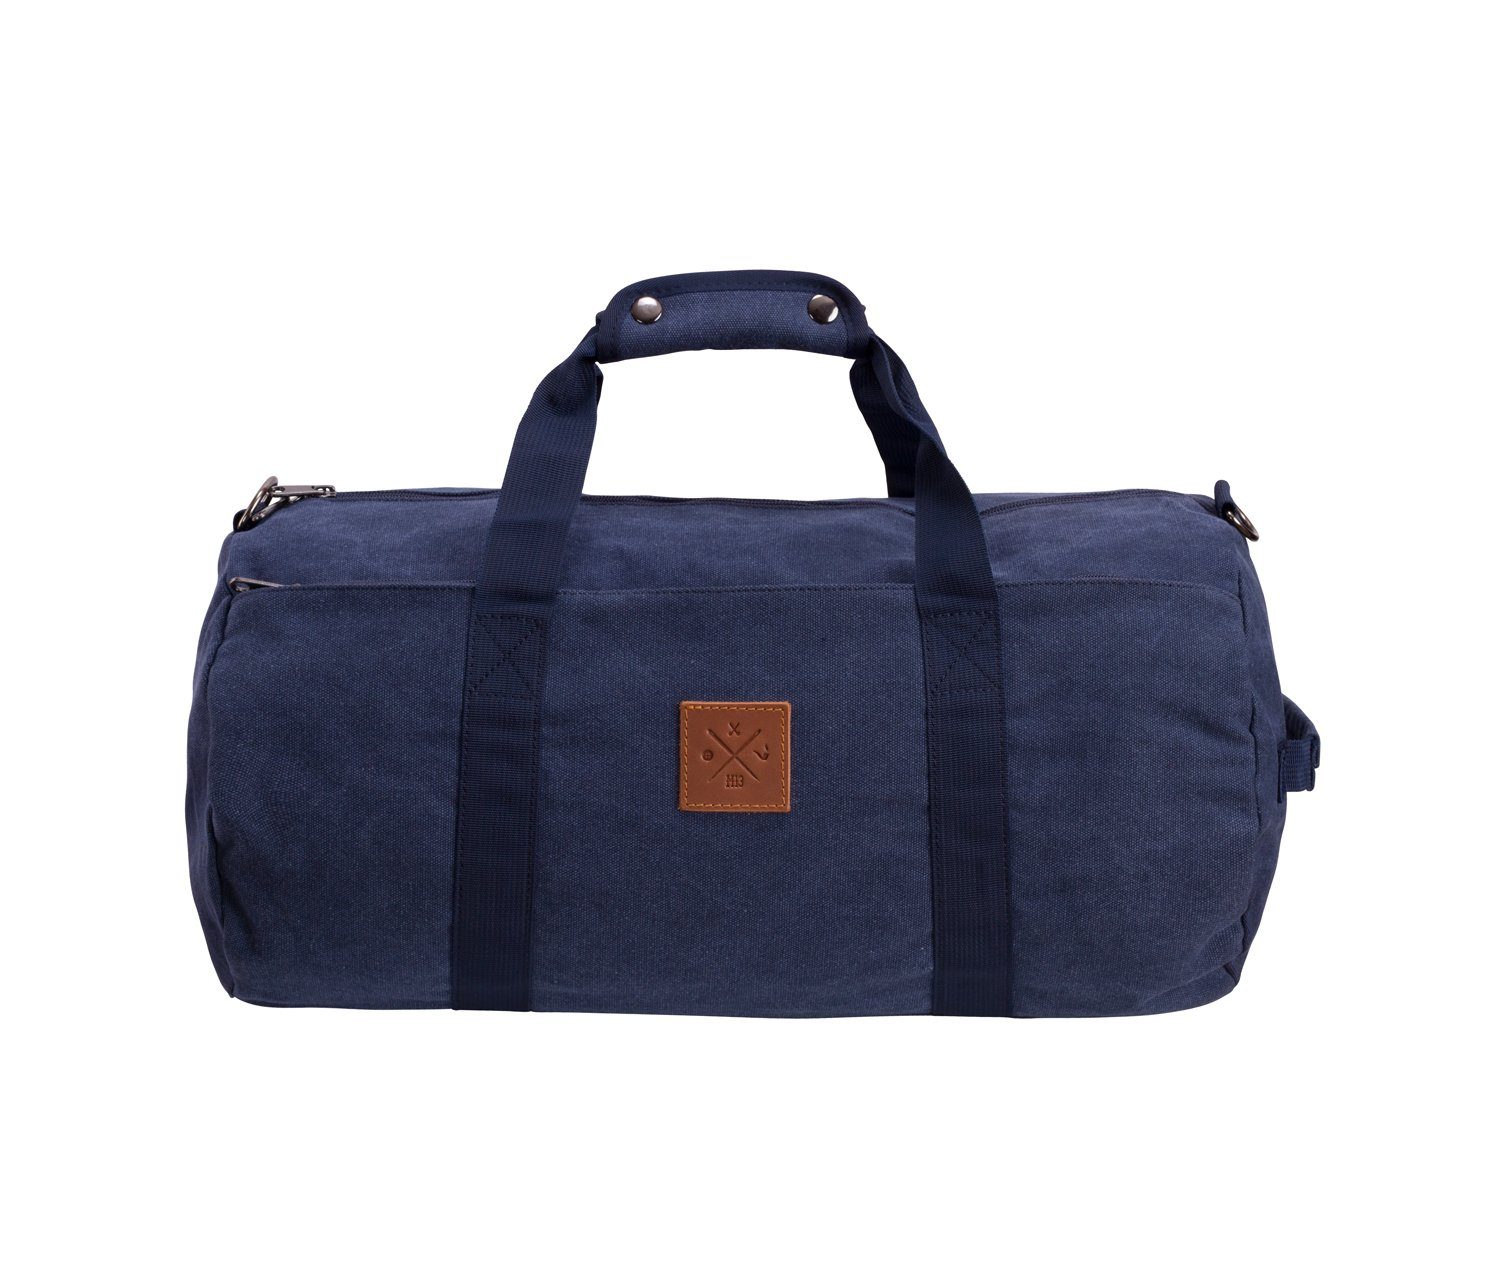 Manufaktur13 Sporttasche Canvas Barrel Bag - Sporttasche, Duffel Bag, 24L Fassungsvermögen Navy